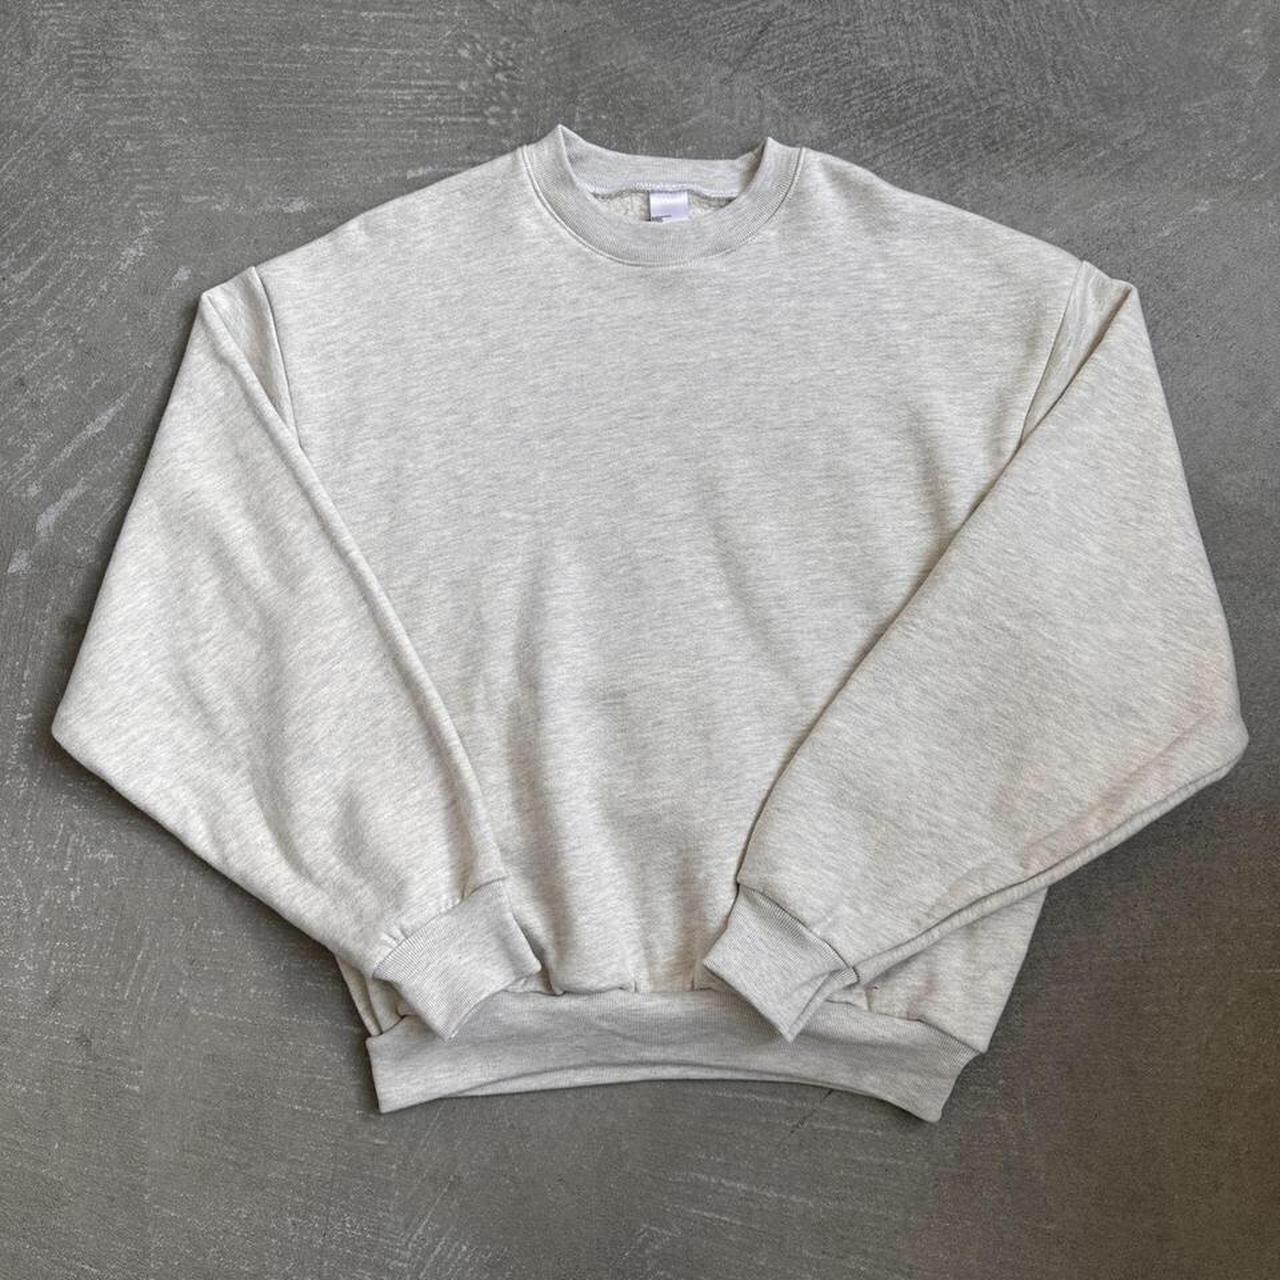 Los Angeles Apparel | Fleece Wide Crewneck Sweatshirt for Women in Scour, Size XS